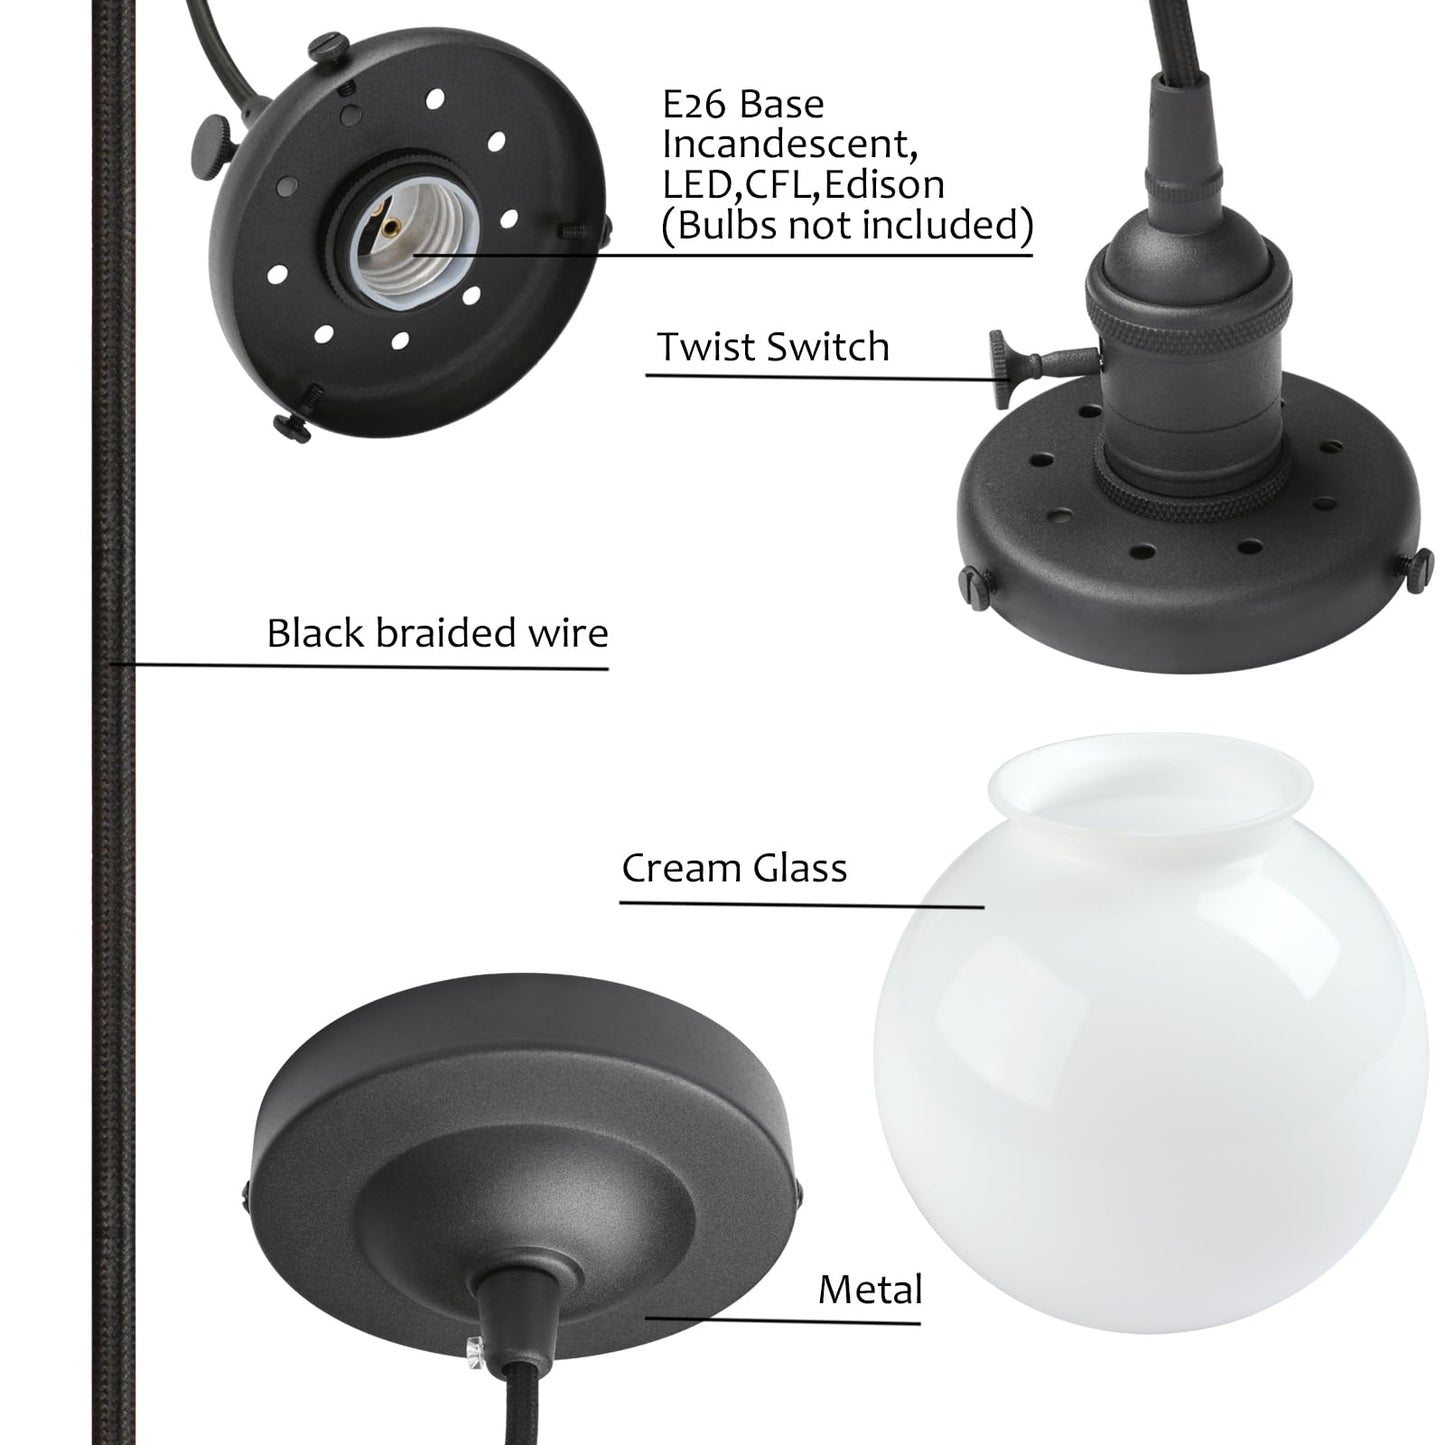 Milk White Globe Pendant Light with Switch, Vintage Pendant Lighting Lamp